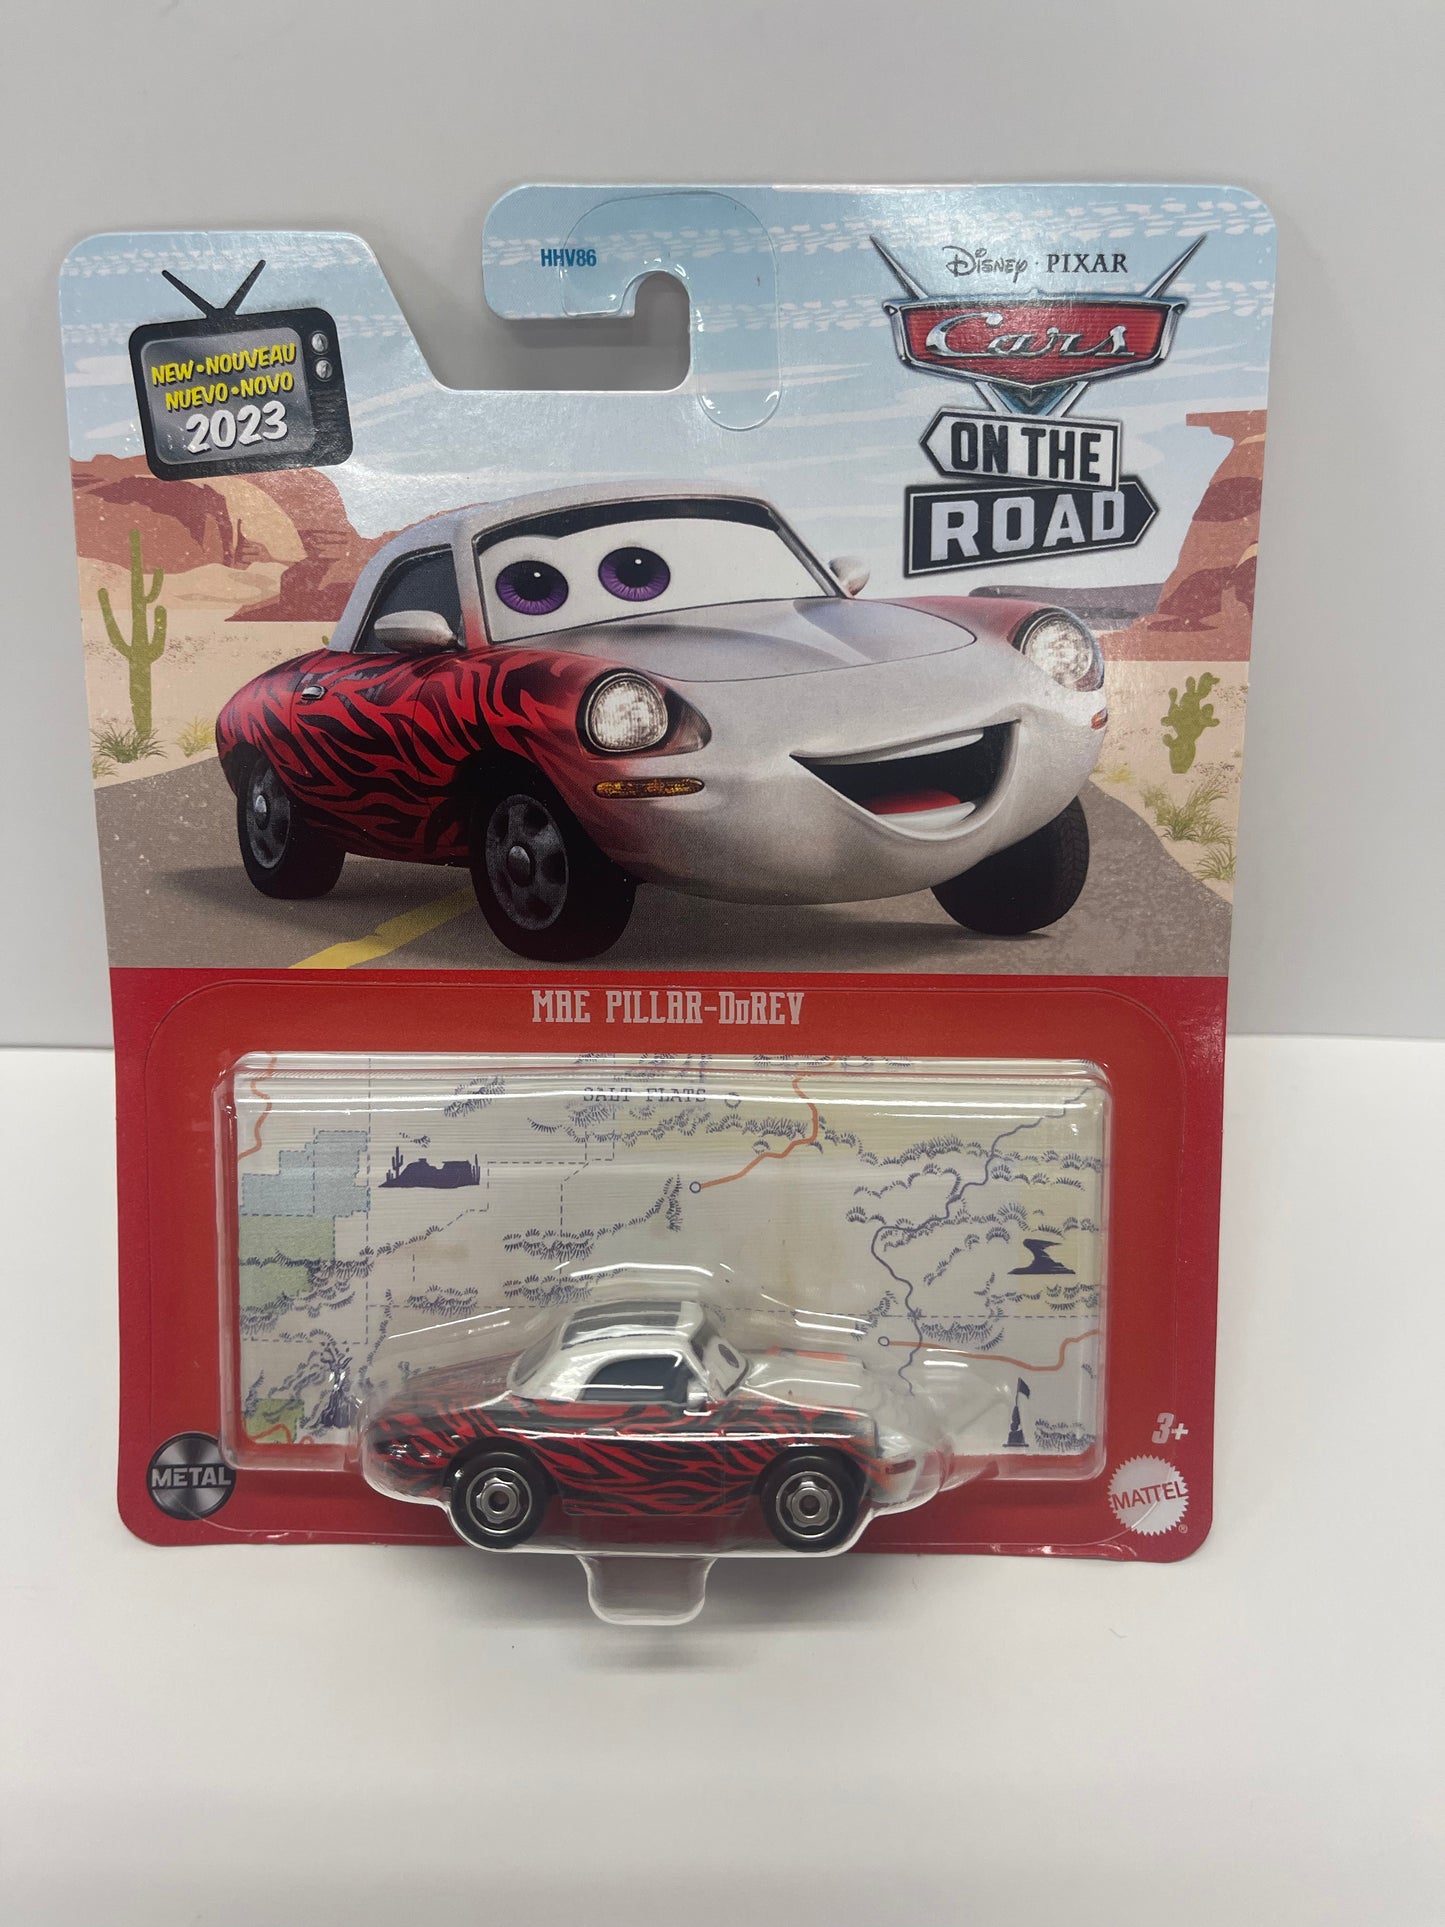 Disney Pixar Cars "On The Road" 1:55